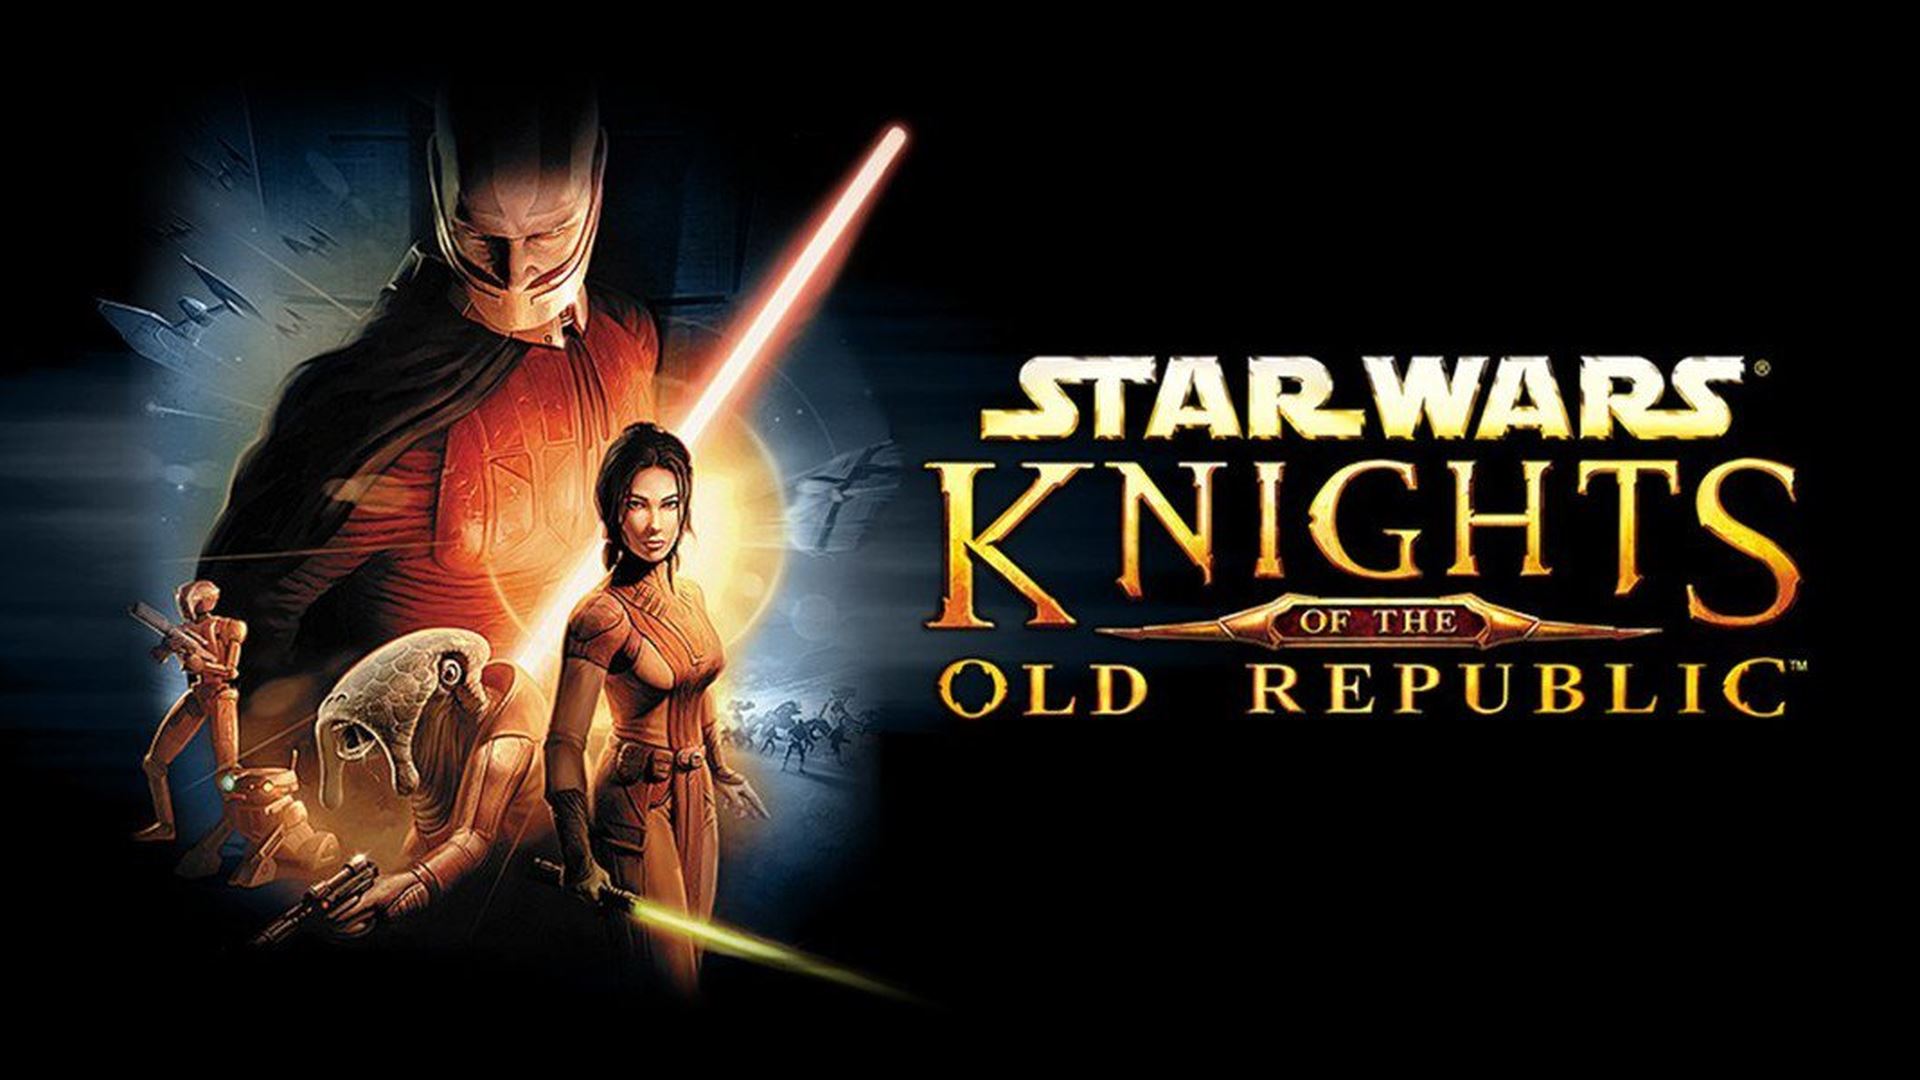 Remake Star Wars: Knight of the Old Republic ma być grą z gatunku Action RPG